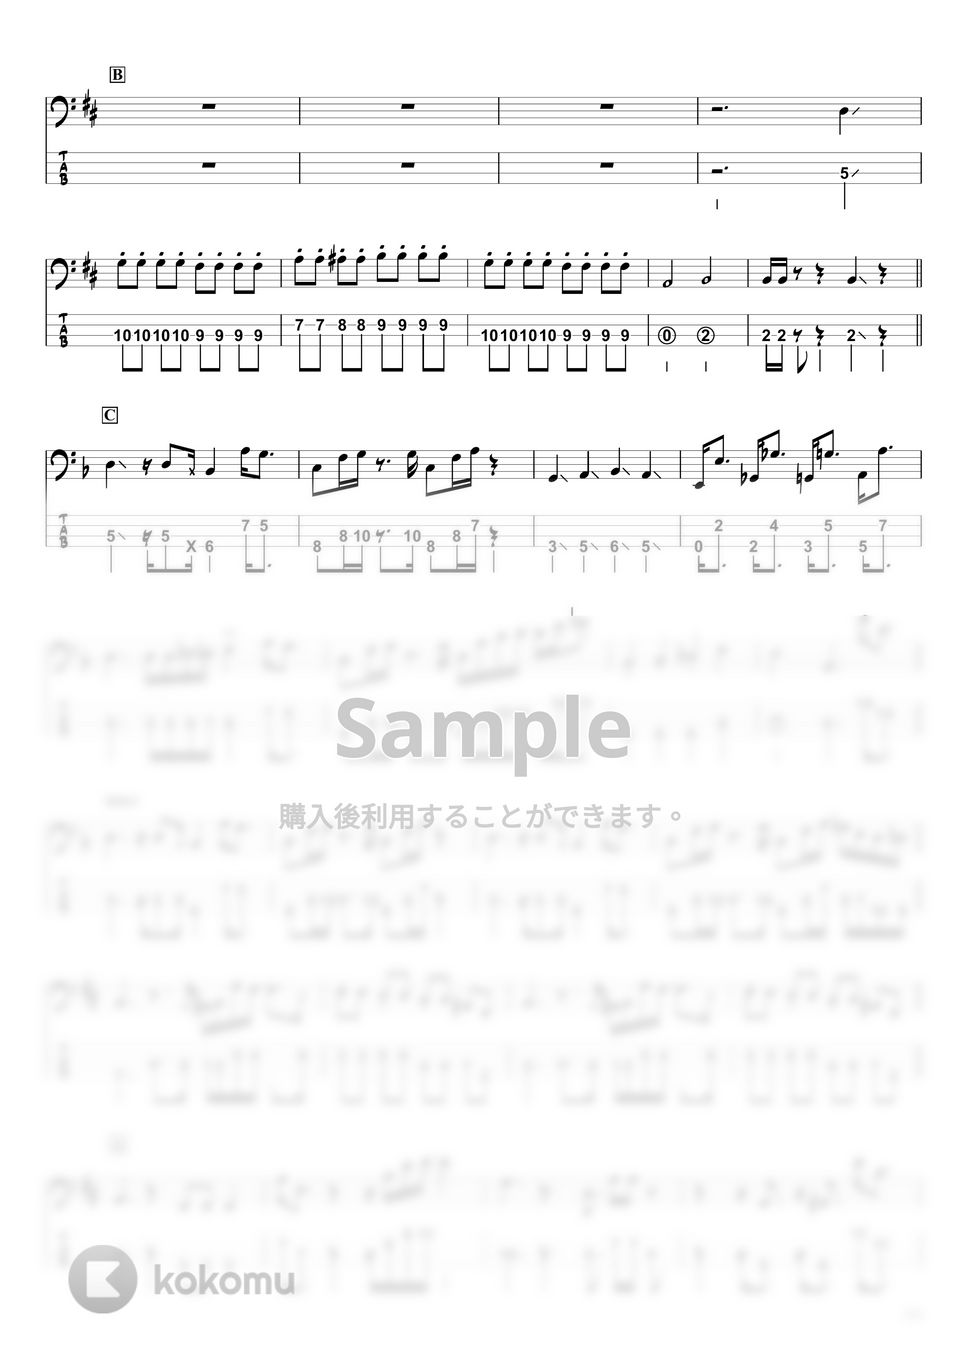 Ado - ギラギラ (ベースTAB譜 / ☆4弦ベース対応) by swbass